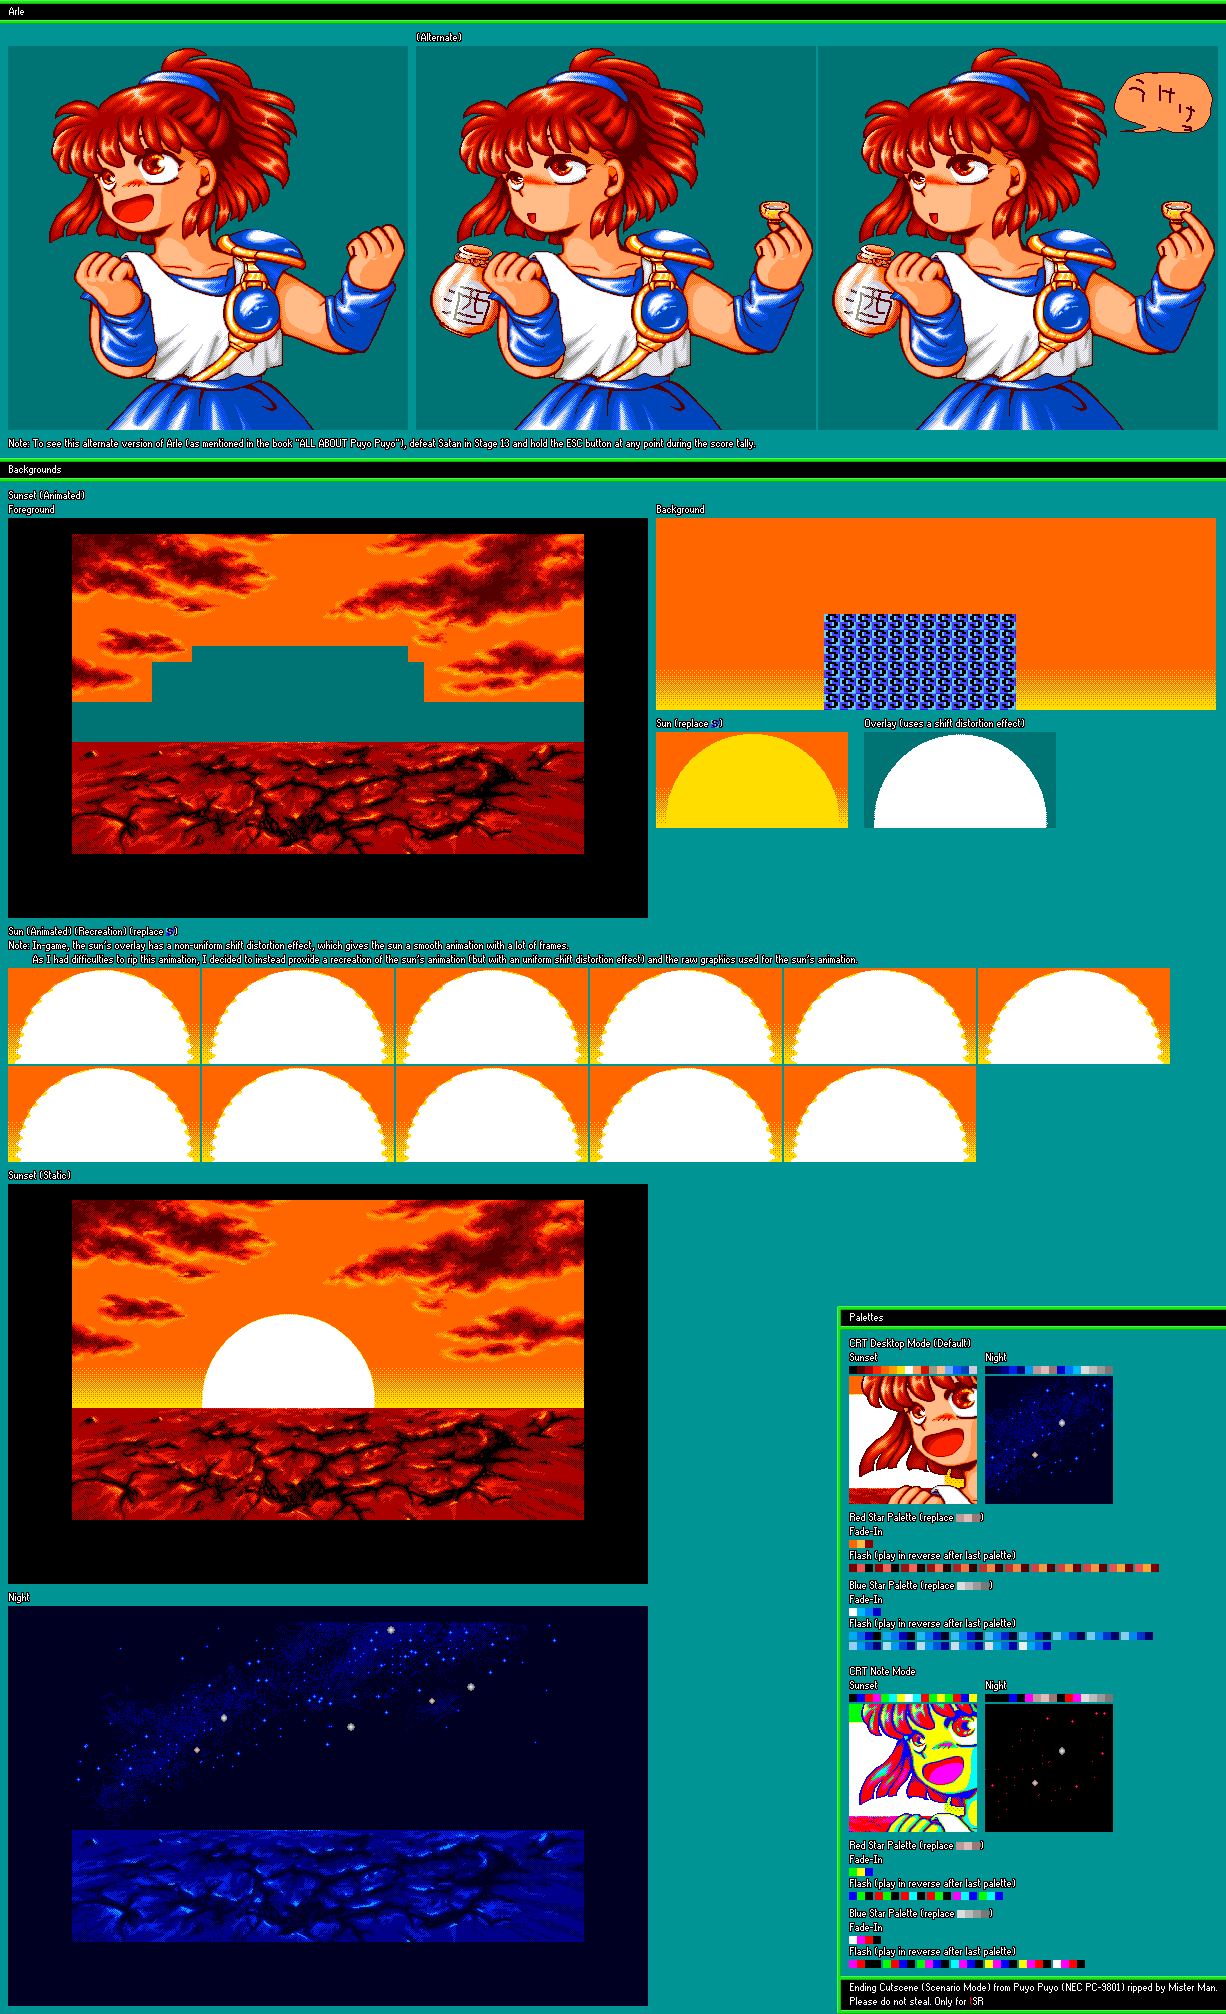 NEC PC-9801 - Puyo Puyo - Ending Cutscene (Scenario Mode) - The